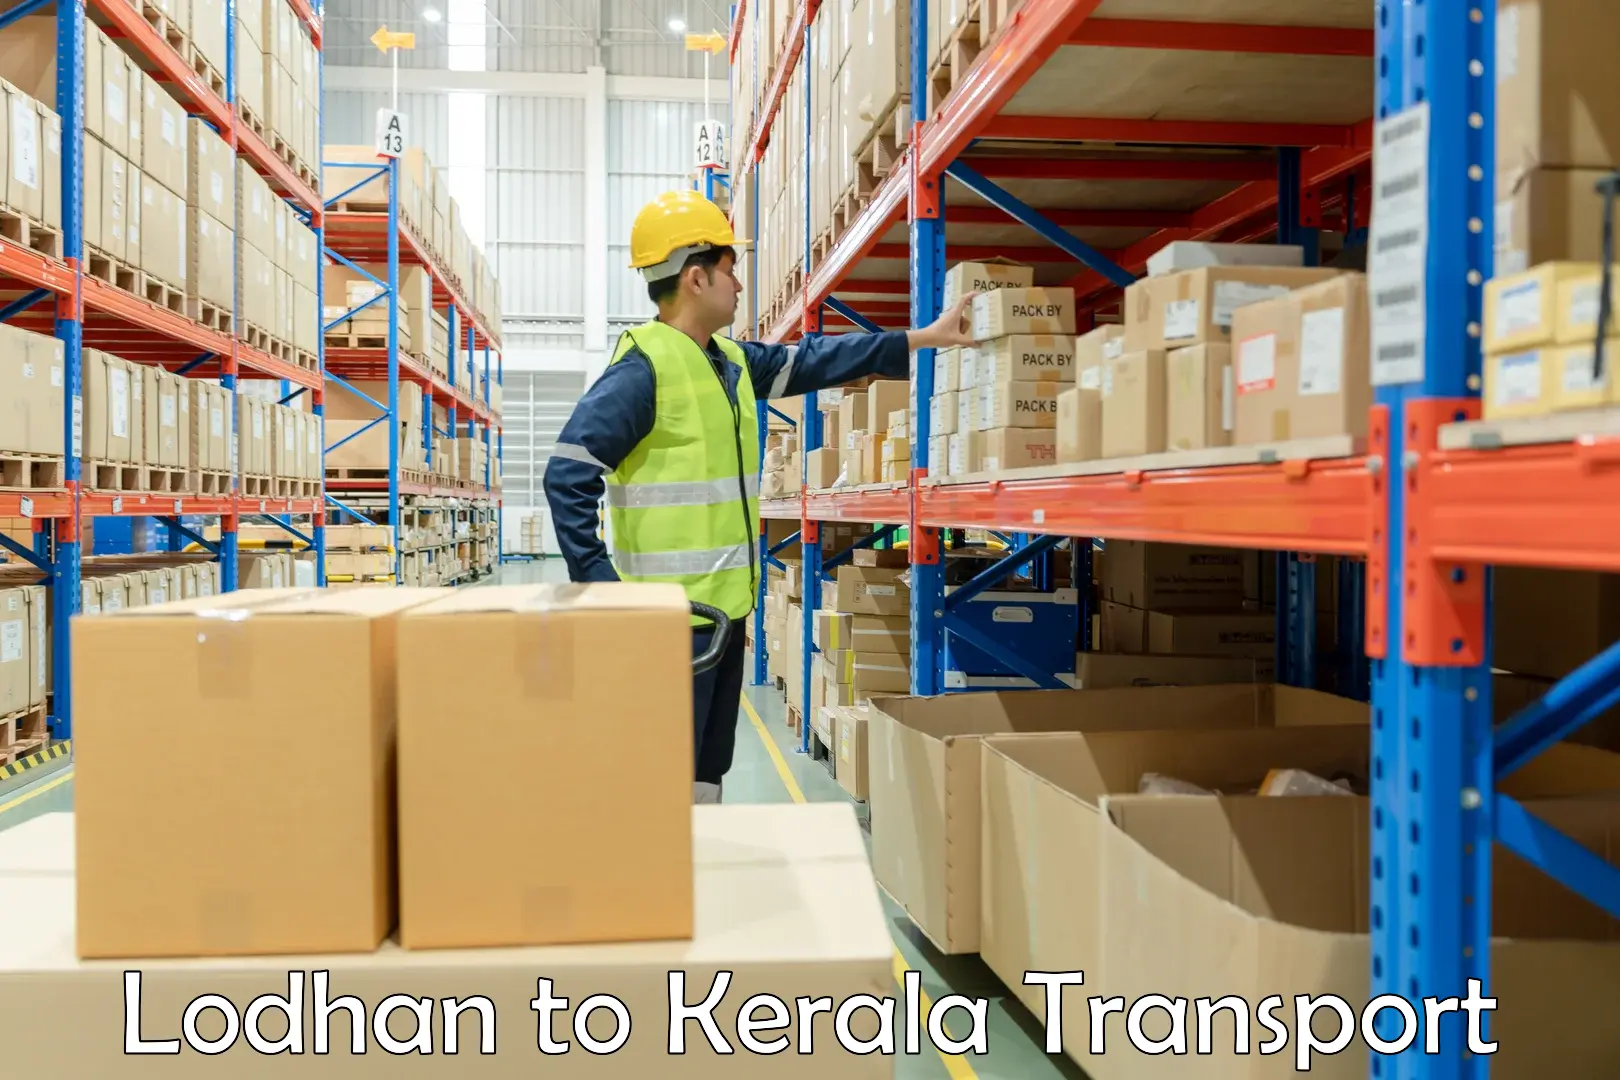 Pick up transport service Lodhan to Kochi